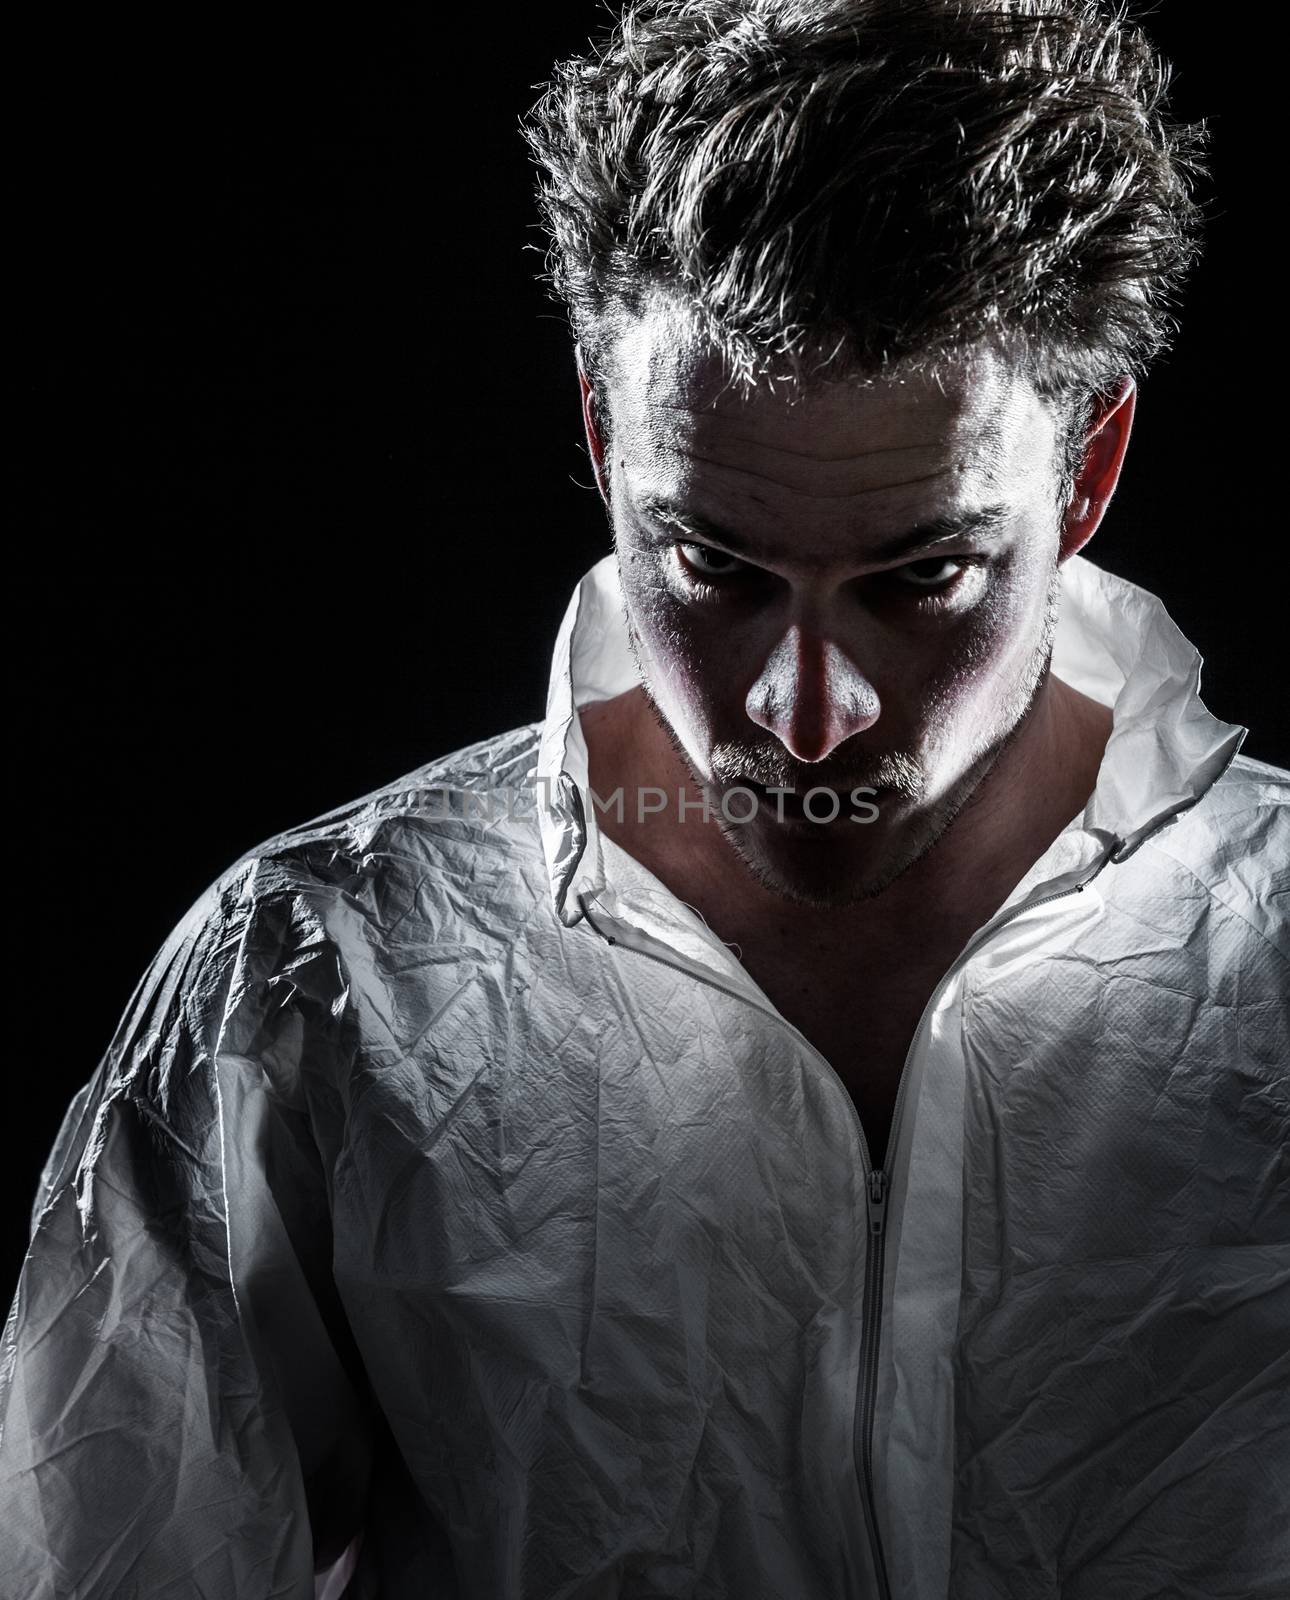 Obscure Freaky Psycho Man by aetb